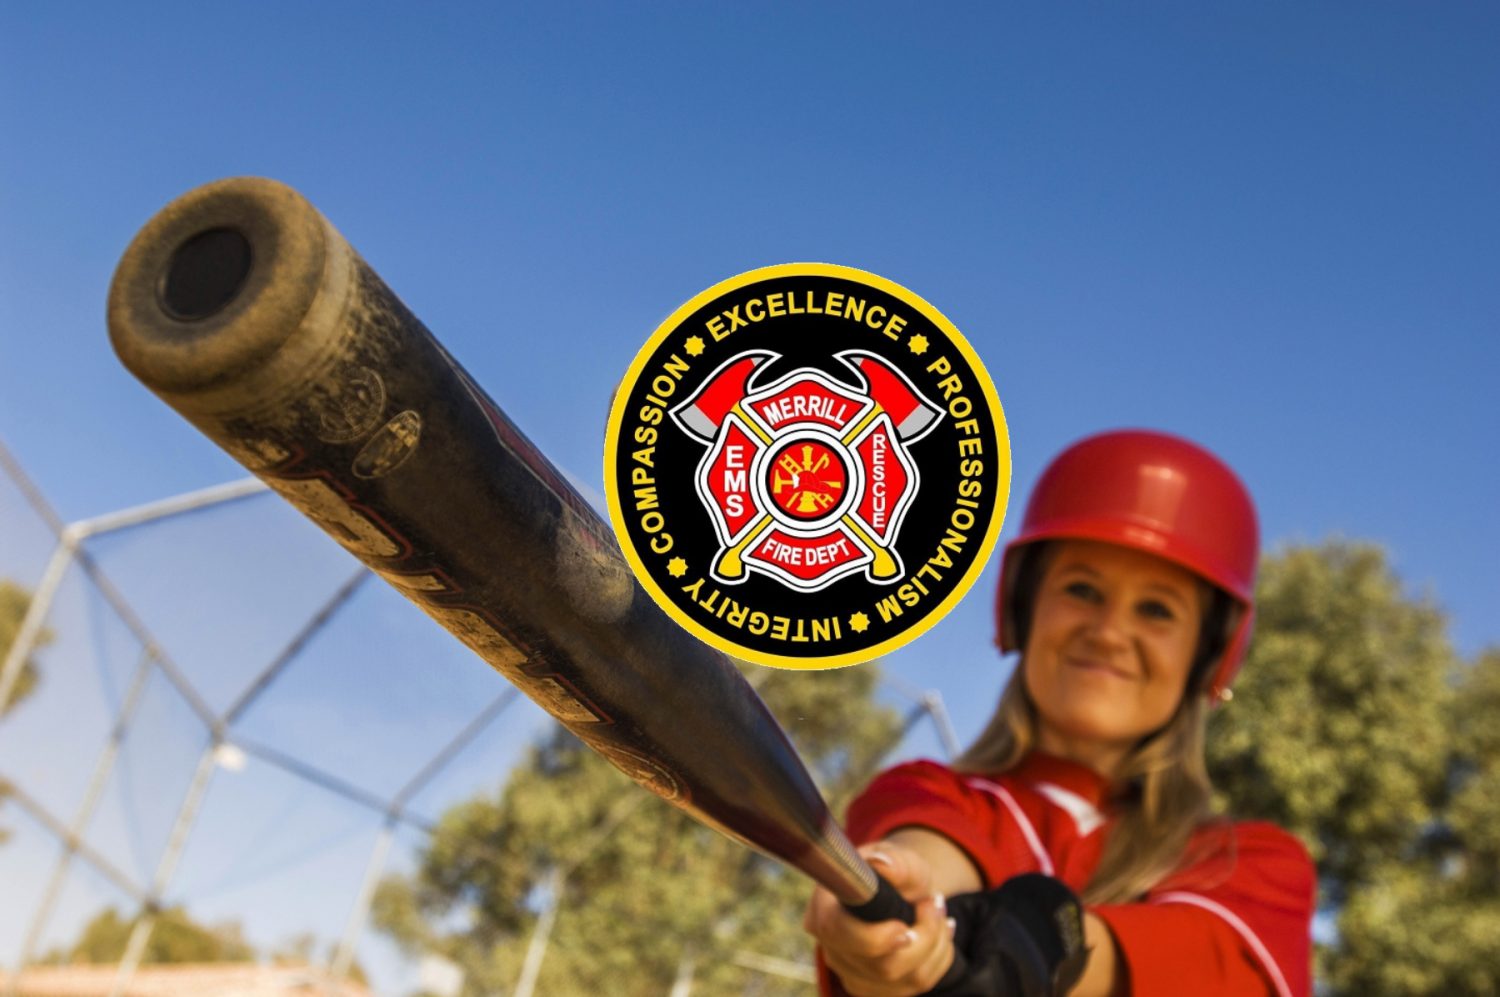 42nd Annual Merrill Firefighters Charities Benefit Softball Tournament